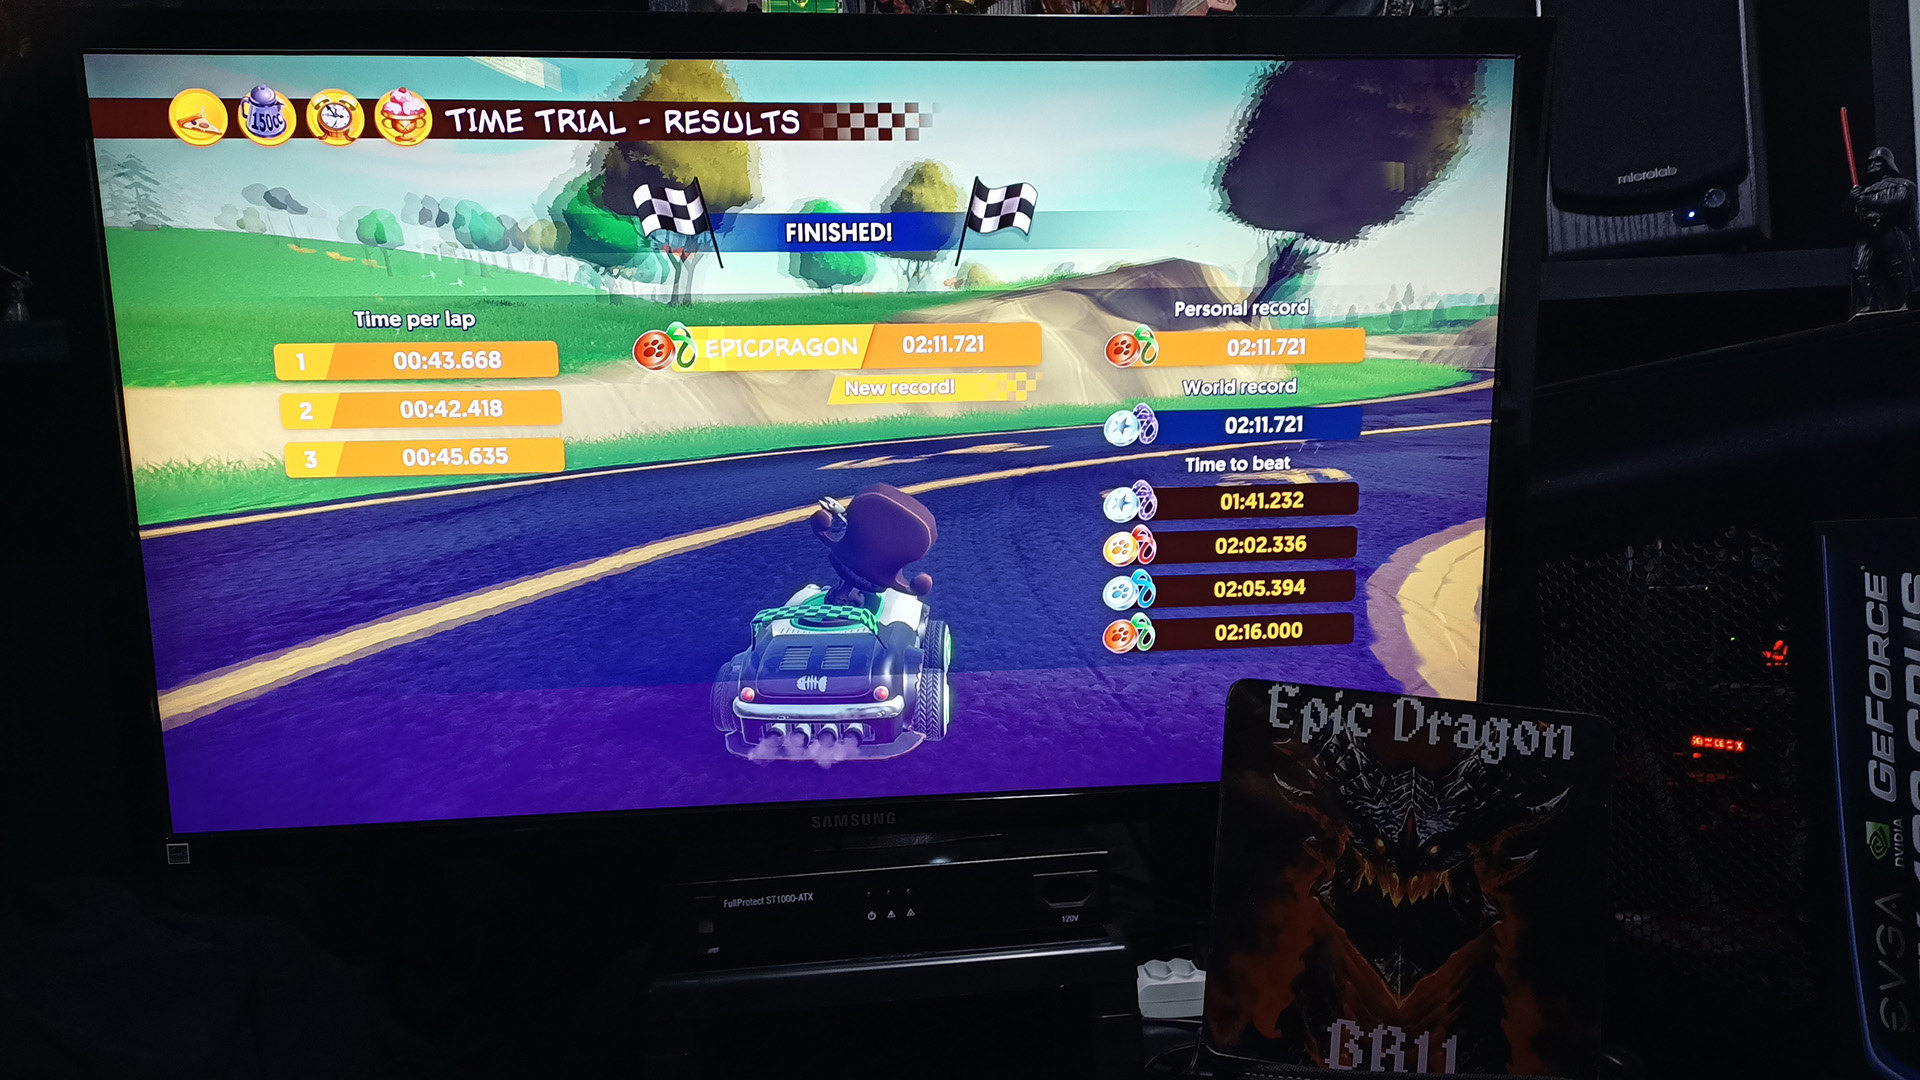 EpicDragon: Garfield Kart Furious Racing: Caskou Park [Time Trial: 3 Laps] (PC) 0:02:11.721 points on 2022-08-11 17:20:33